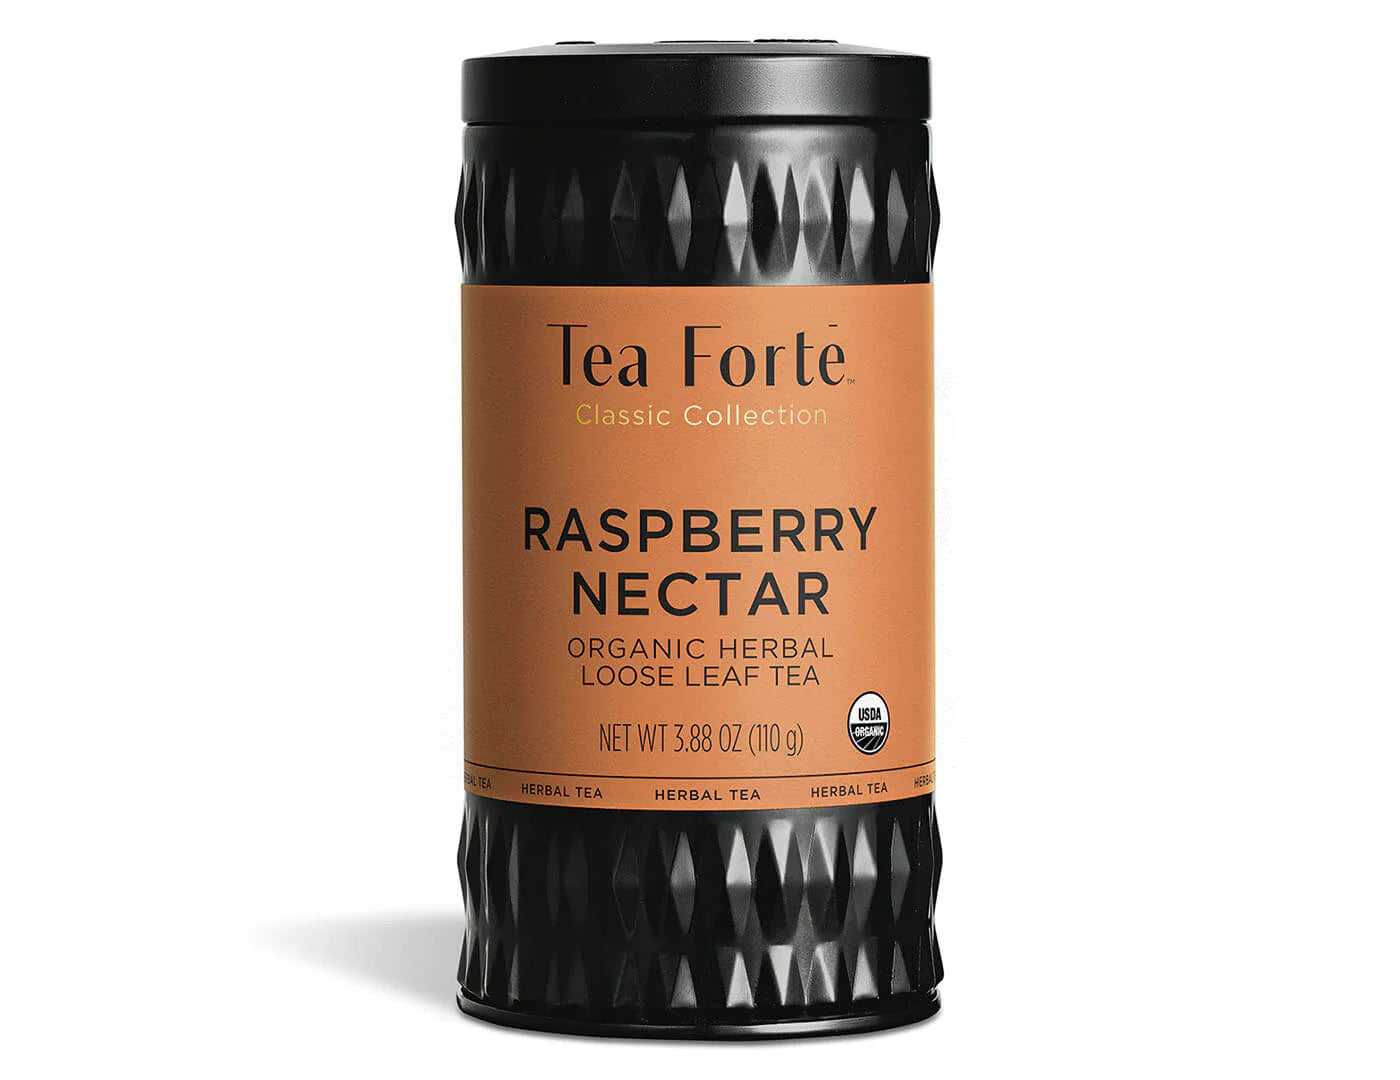 TEA FORTE LOOSE LEAF TEA CANISTERS RASPBERRY NECTAR